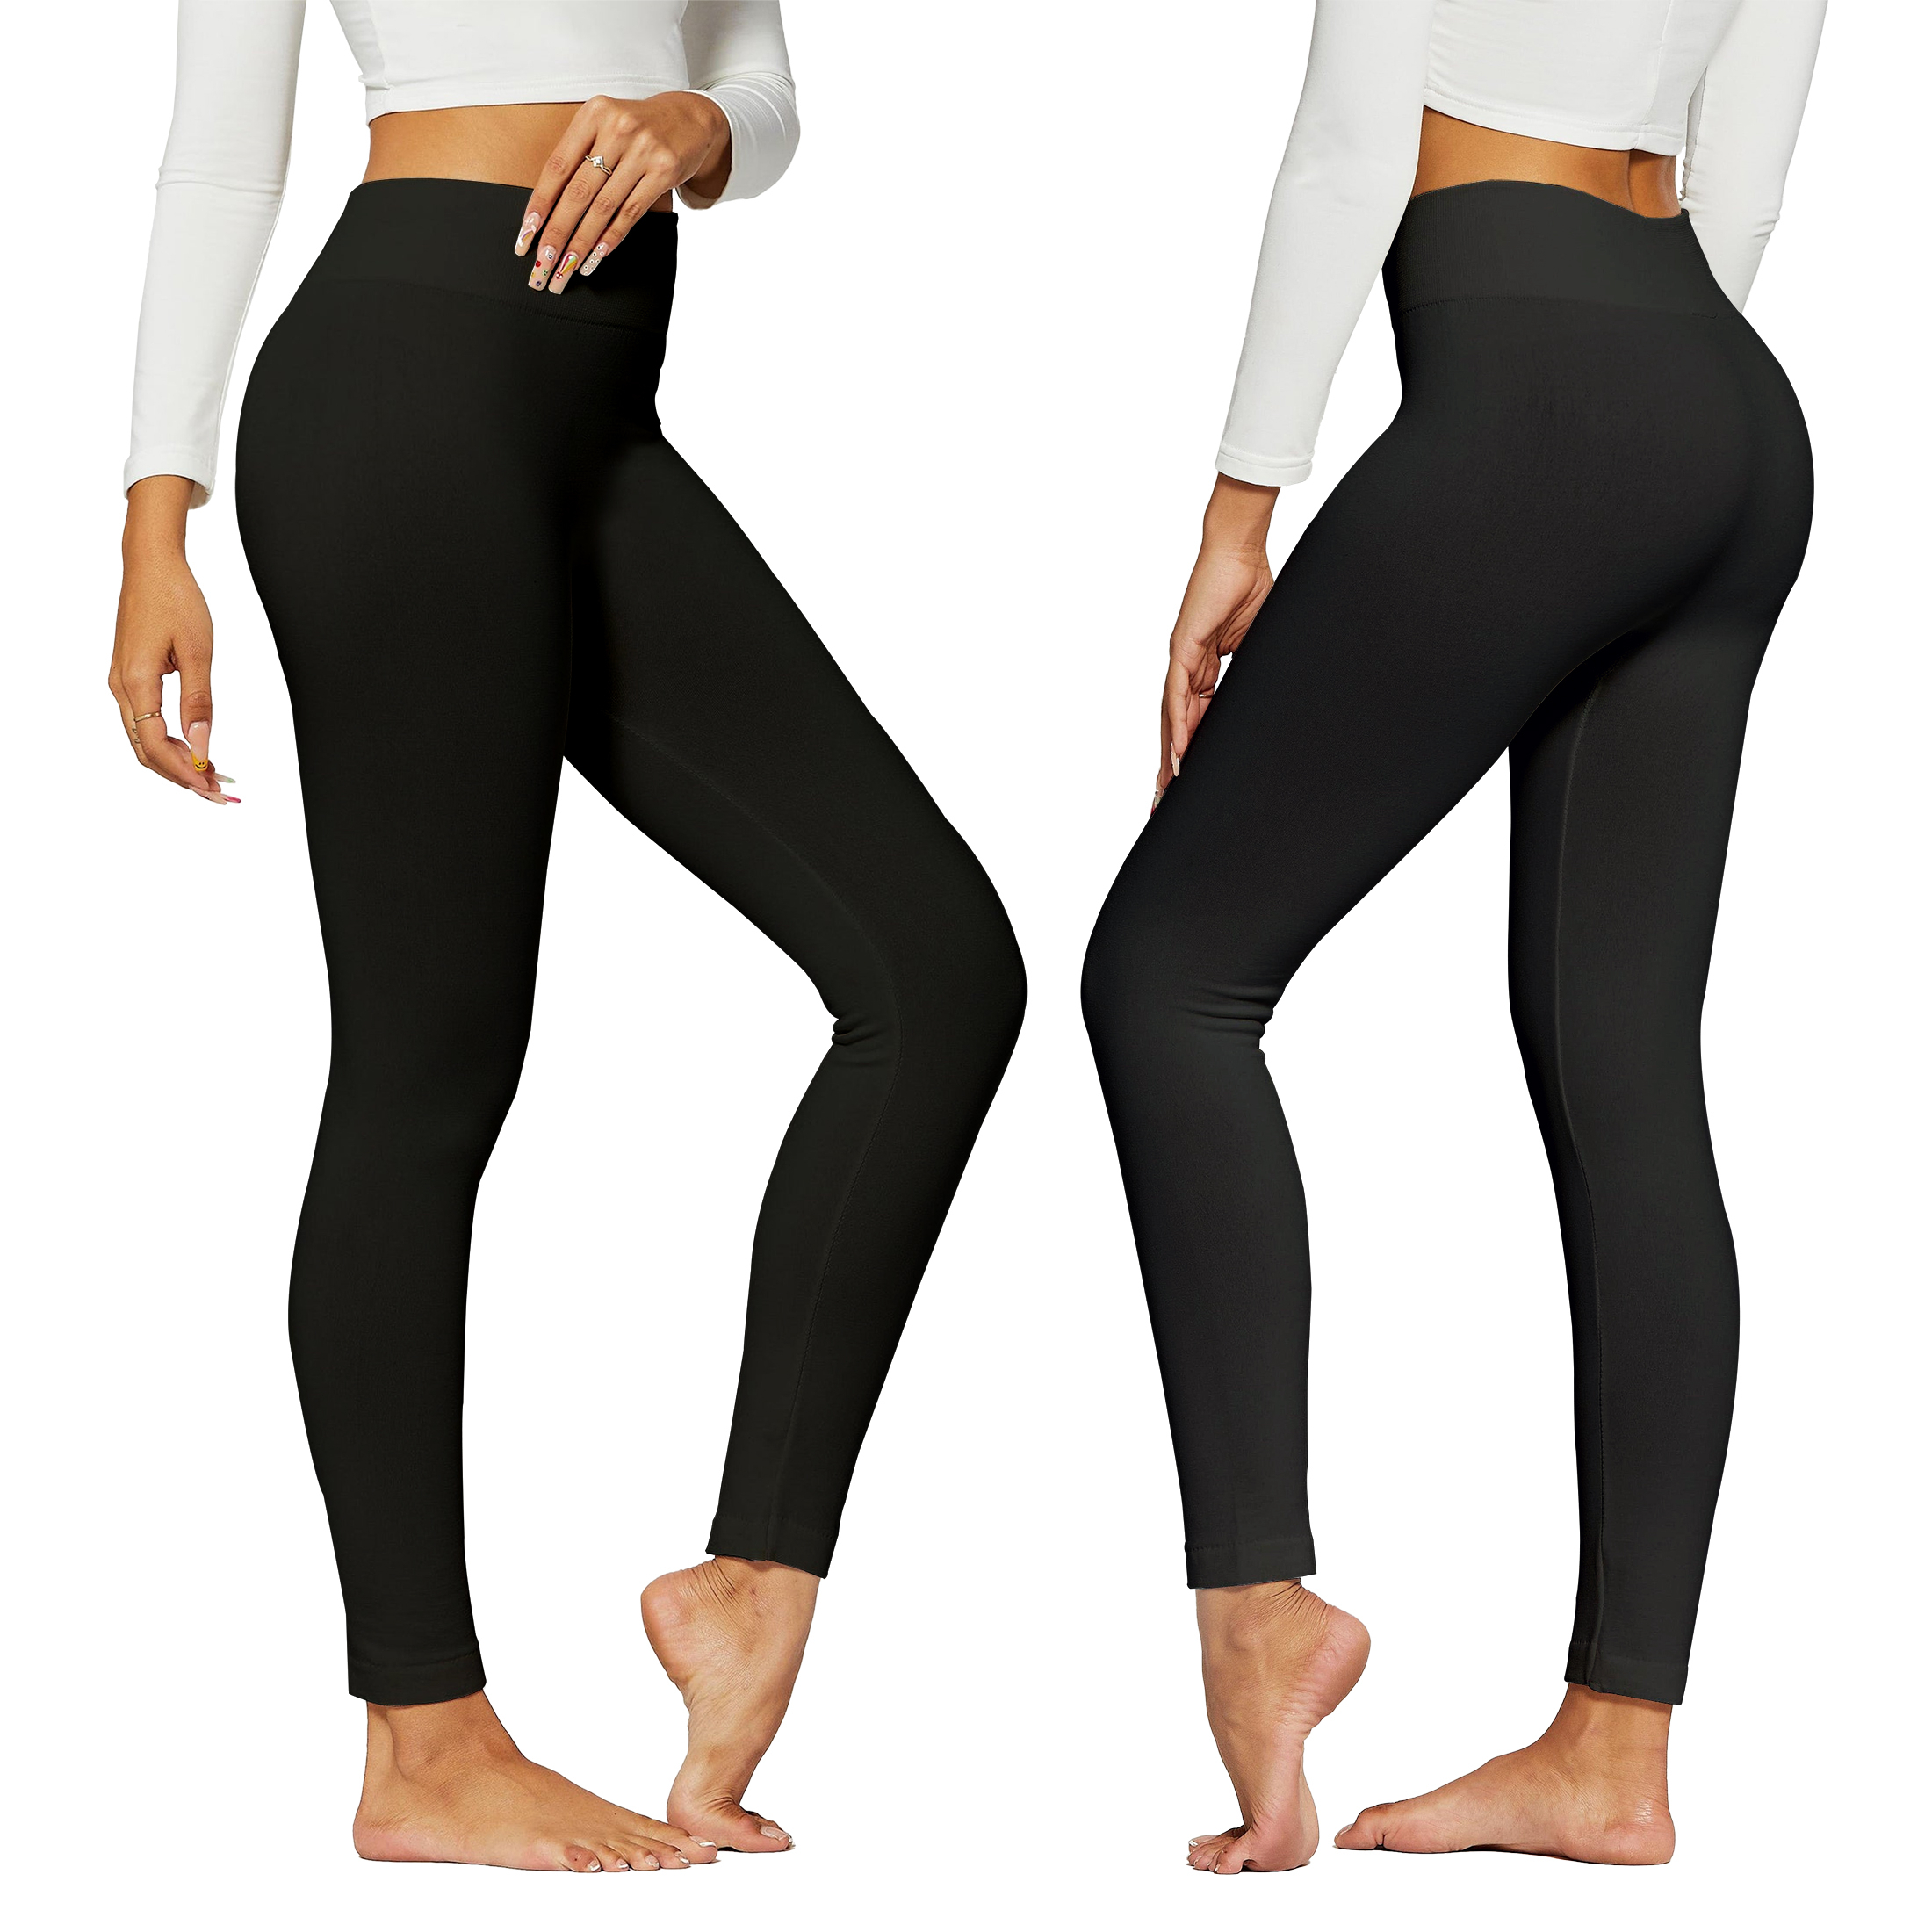 4-Pack:Women's Premium Quality High-Waist Fleece-Lined Leggings (Plus Size Available) - Black, 1X/2X